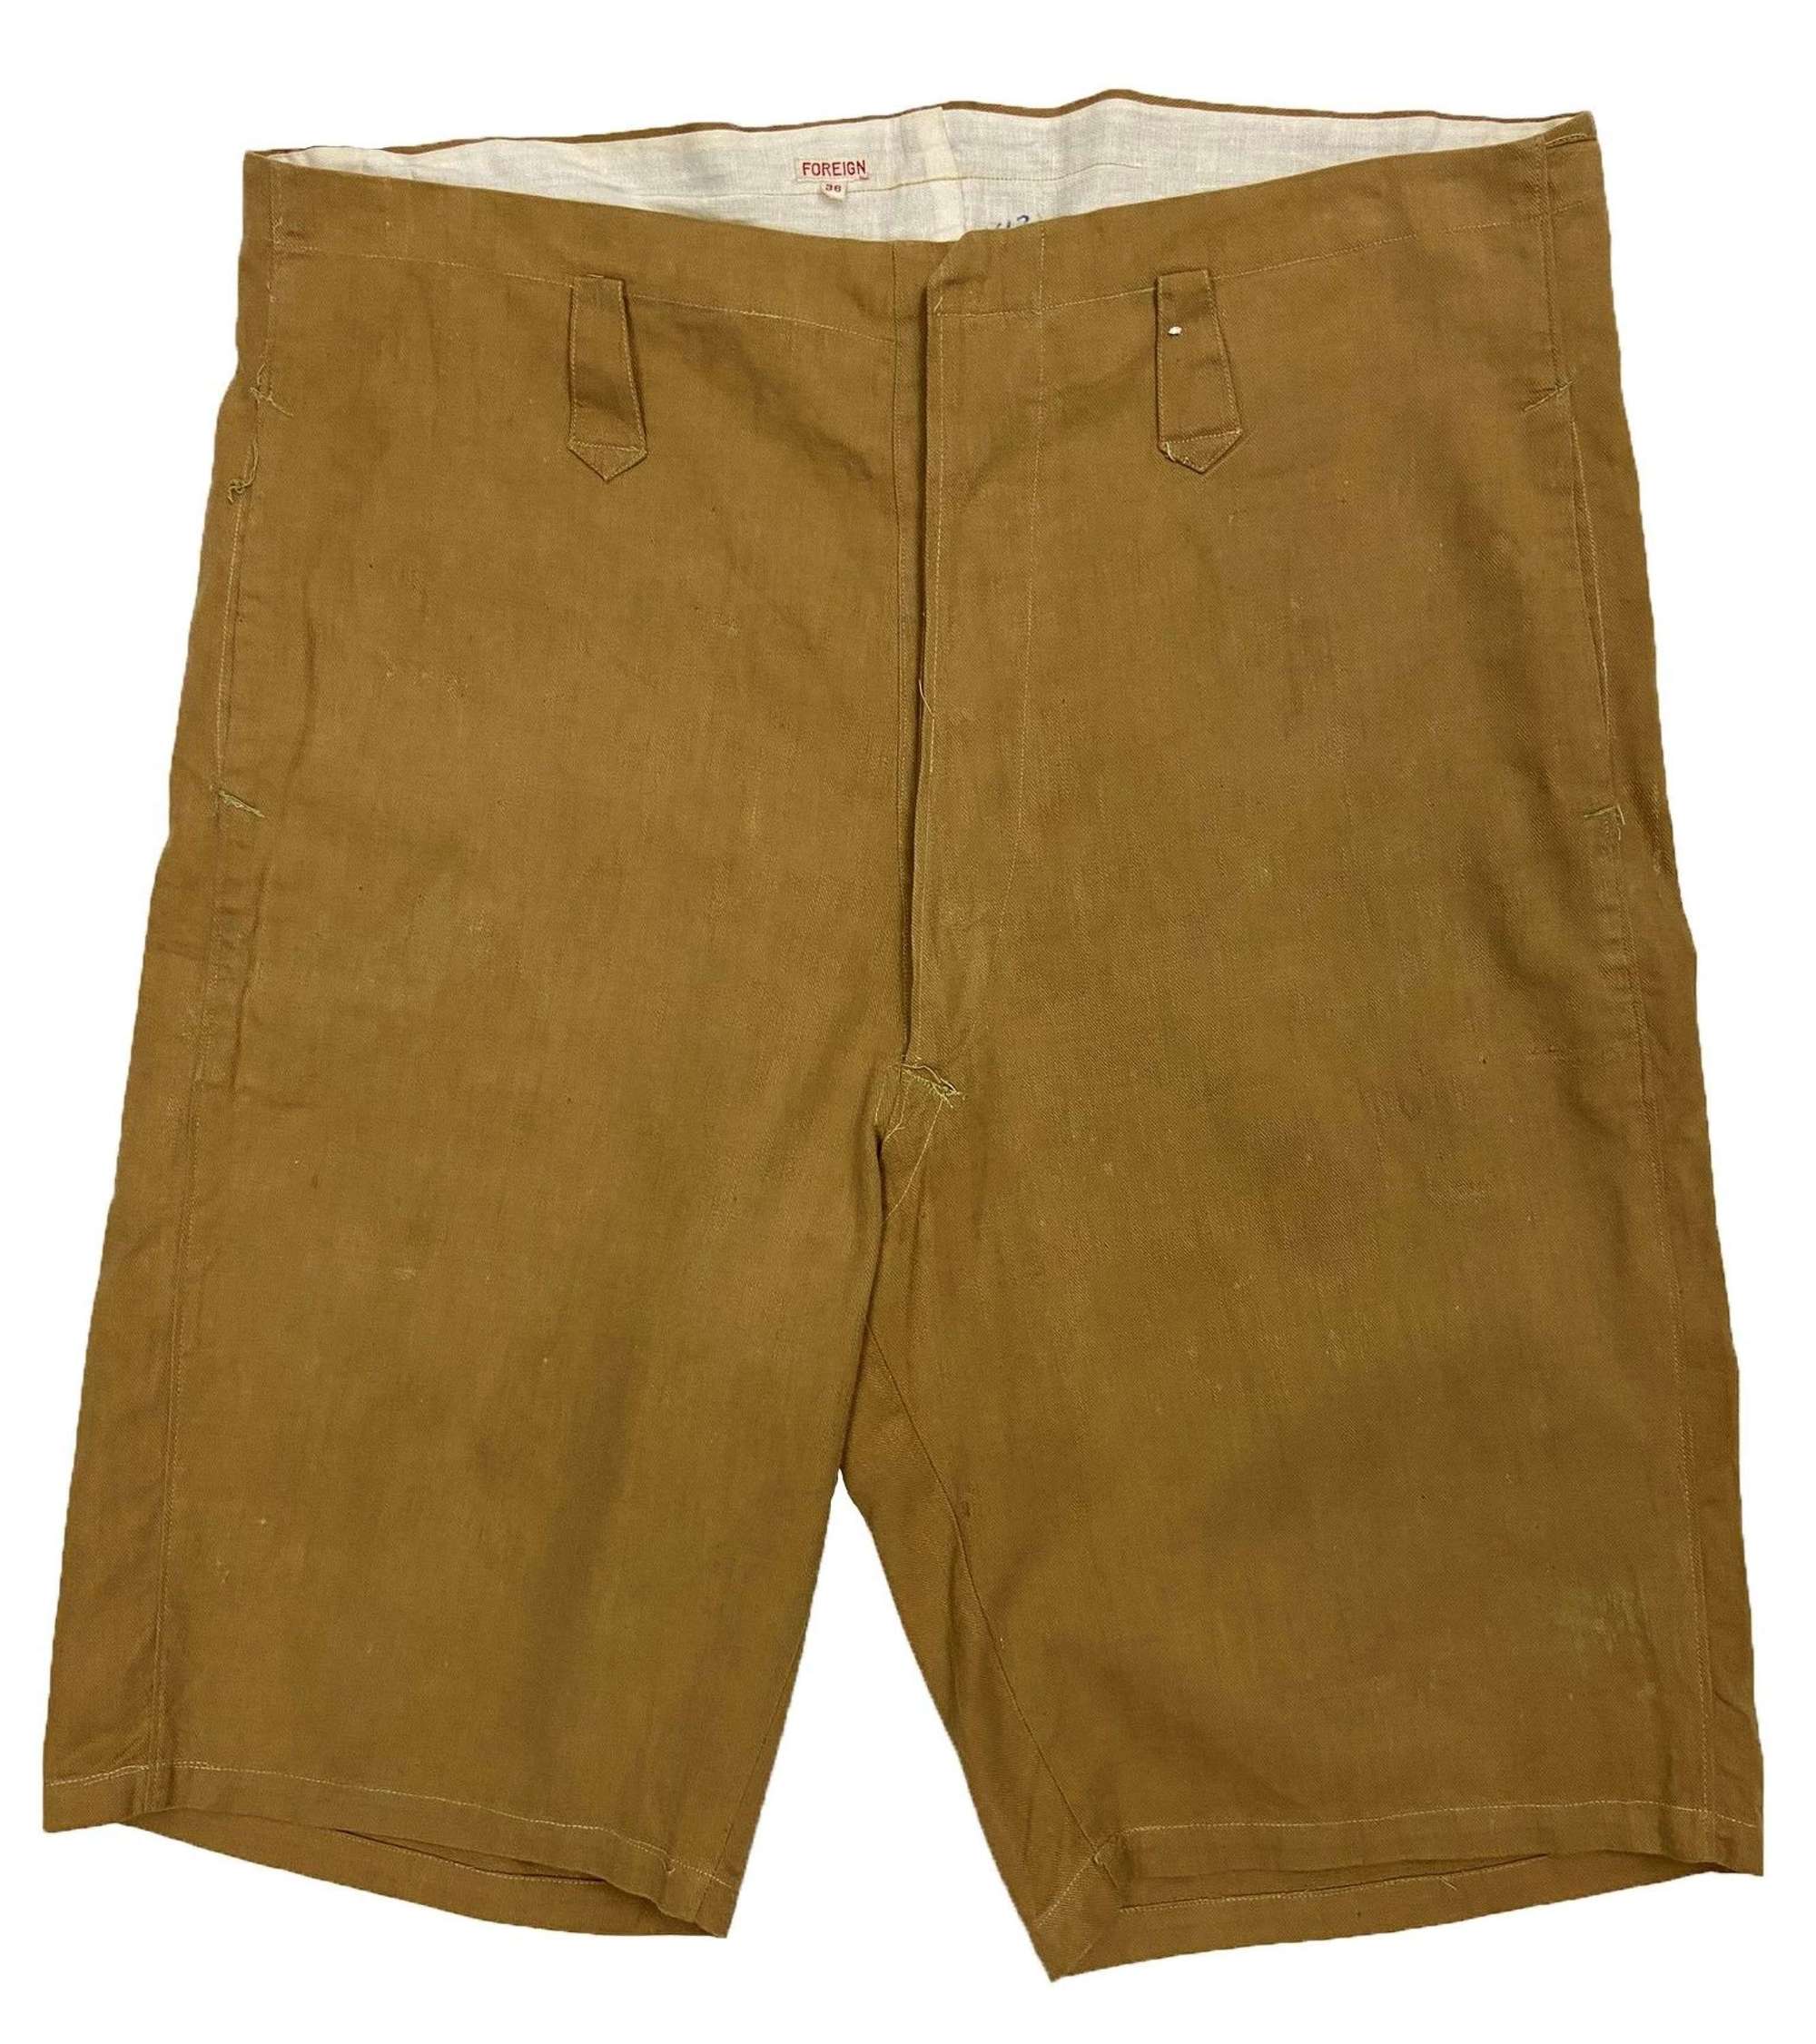 Original 1920s Private Purchase Khaki Drill Shorts